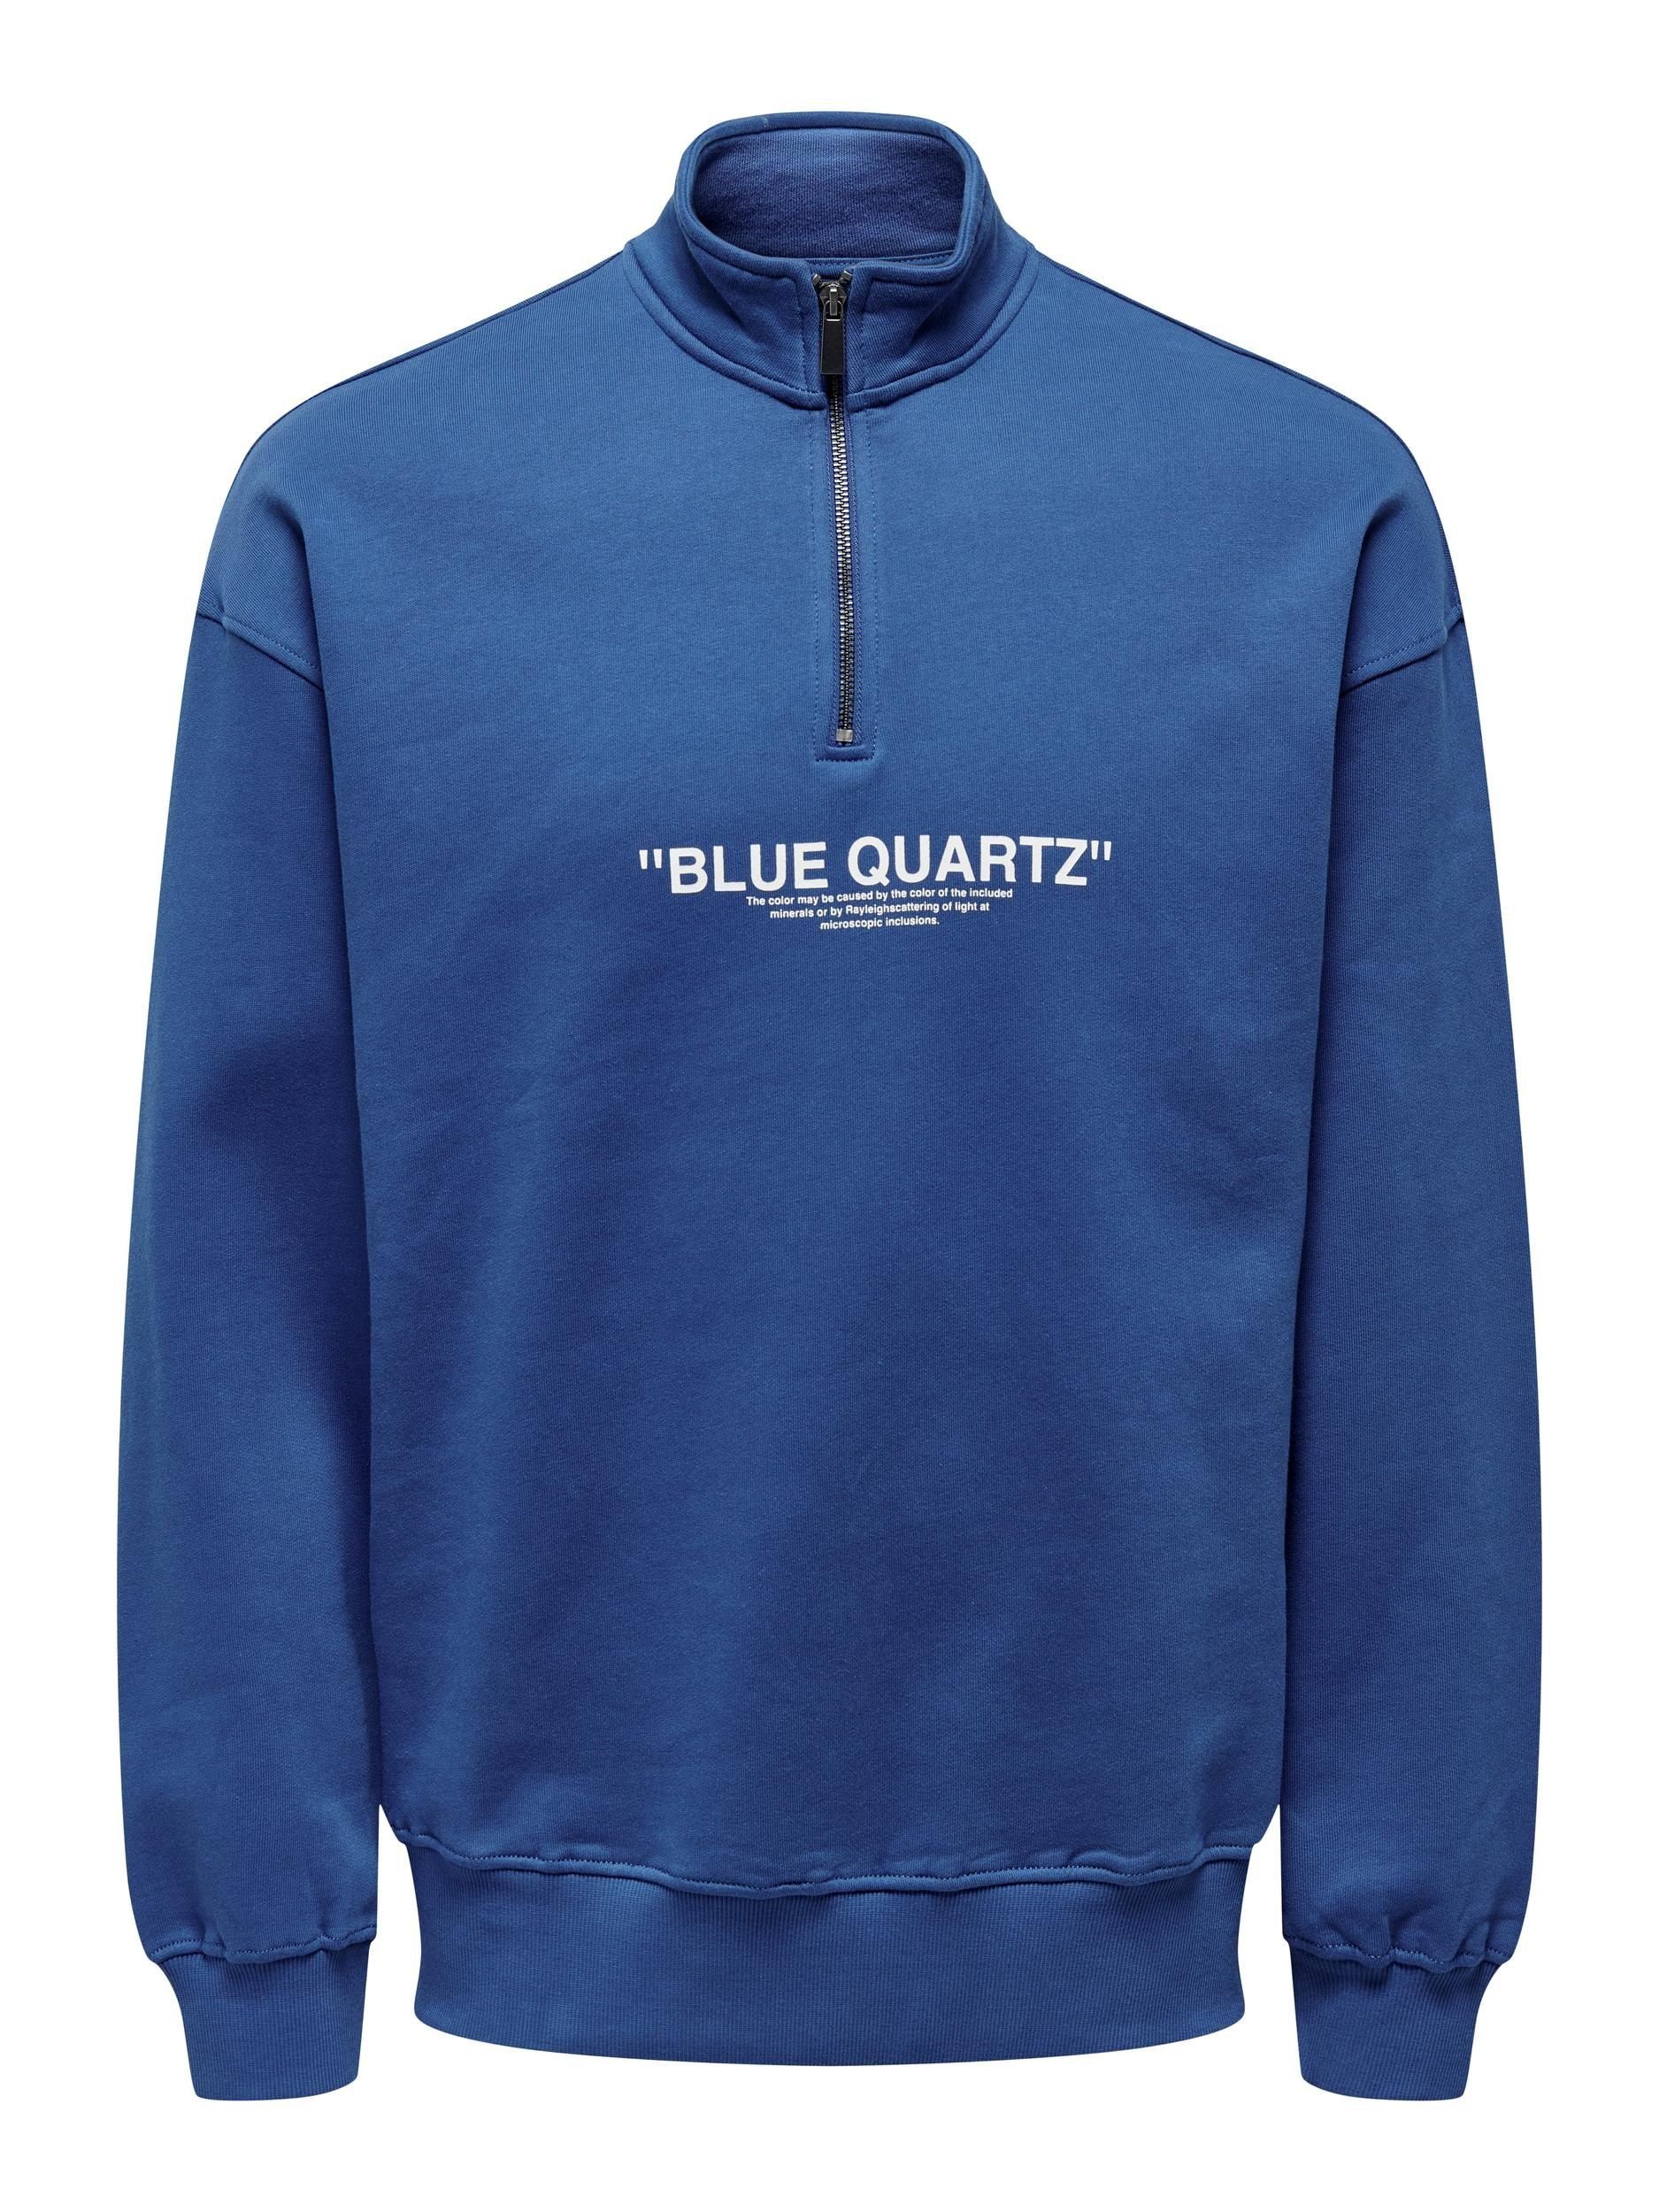 ONLY & SONS Sweatshirt 239353 Blue Quartz